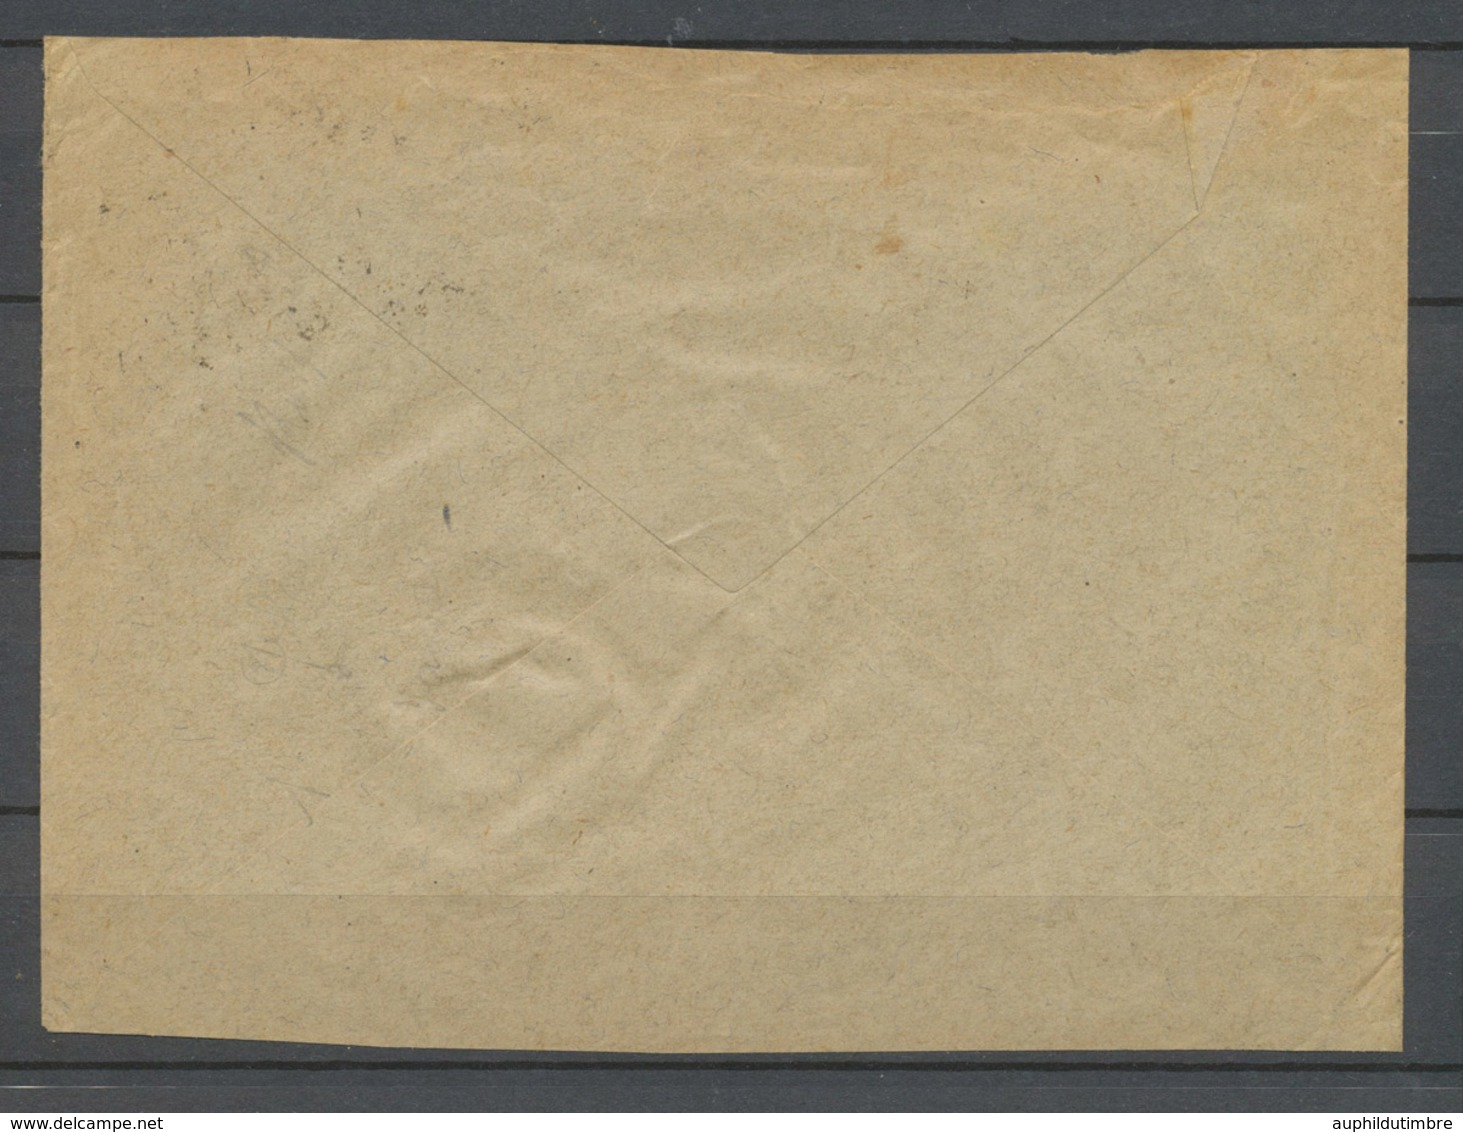 1927 Lettre N°202, 75c Rose CASSURE BORD DE GAUCHE Obl. RR, Superbe X4519 - Sin Clasificación